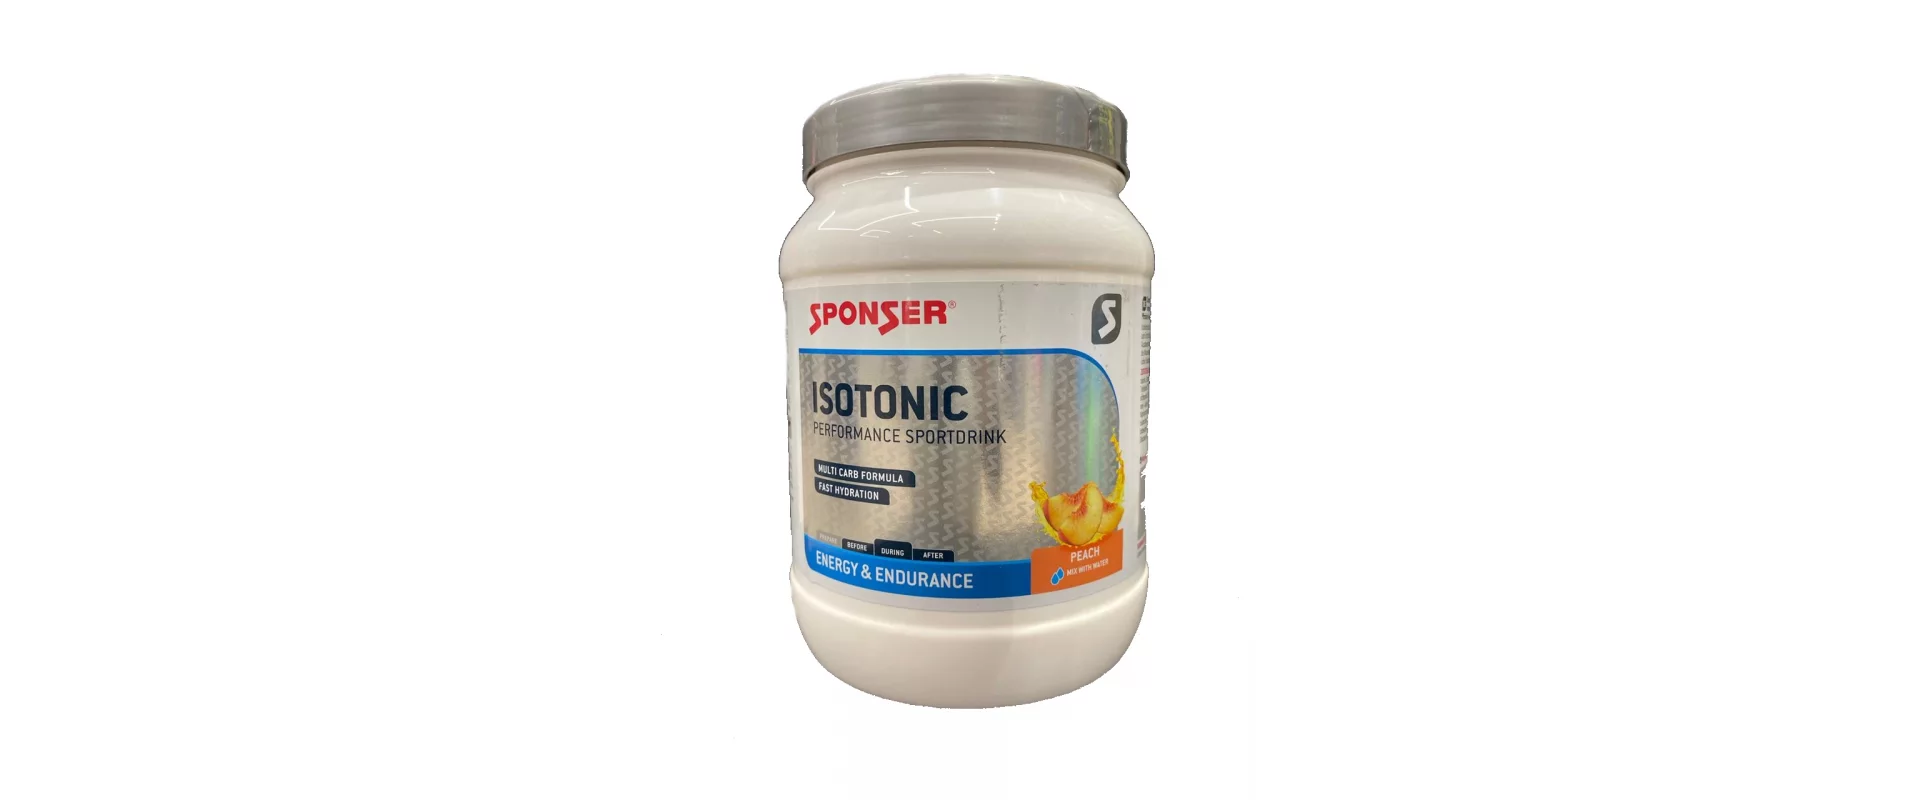 Sponser Isotonic вкус Персик / Изотоник (1kg)